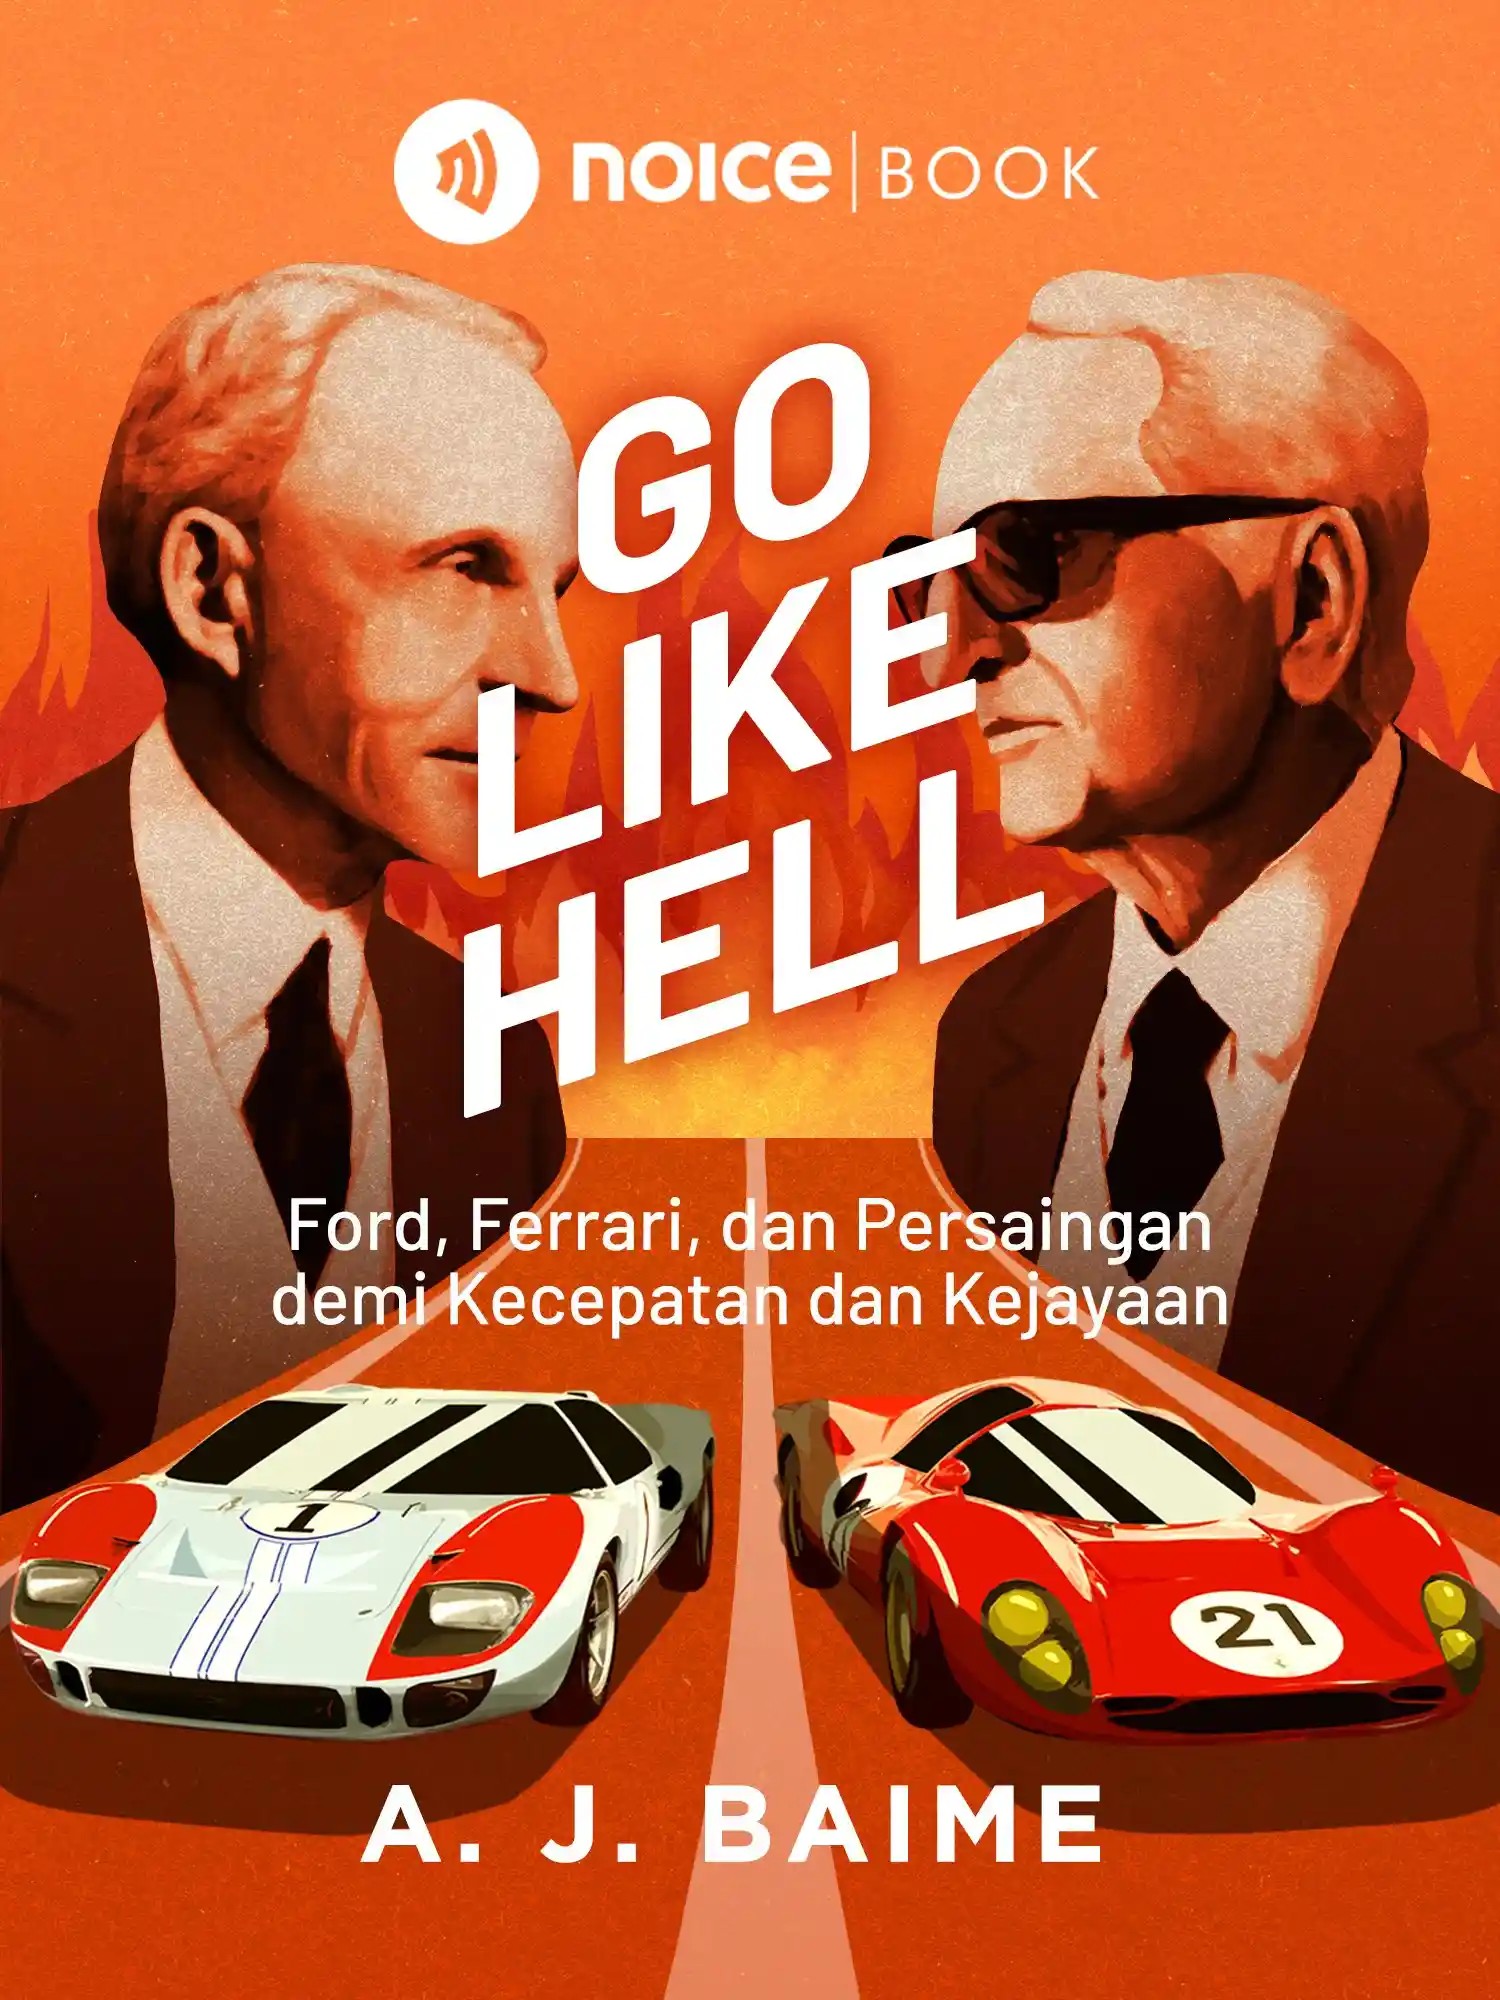 #10 Puncak balapan Ford dan Ferrari; Le Mans 1966.